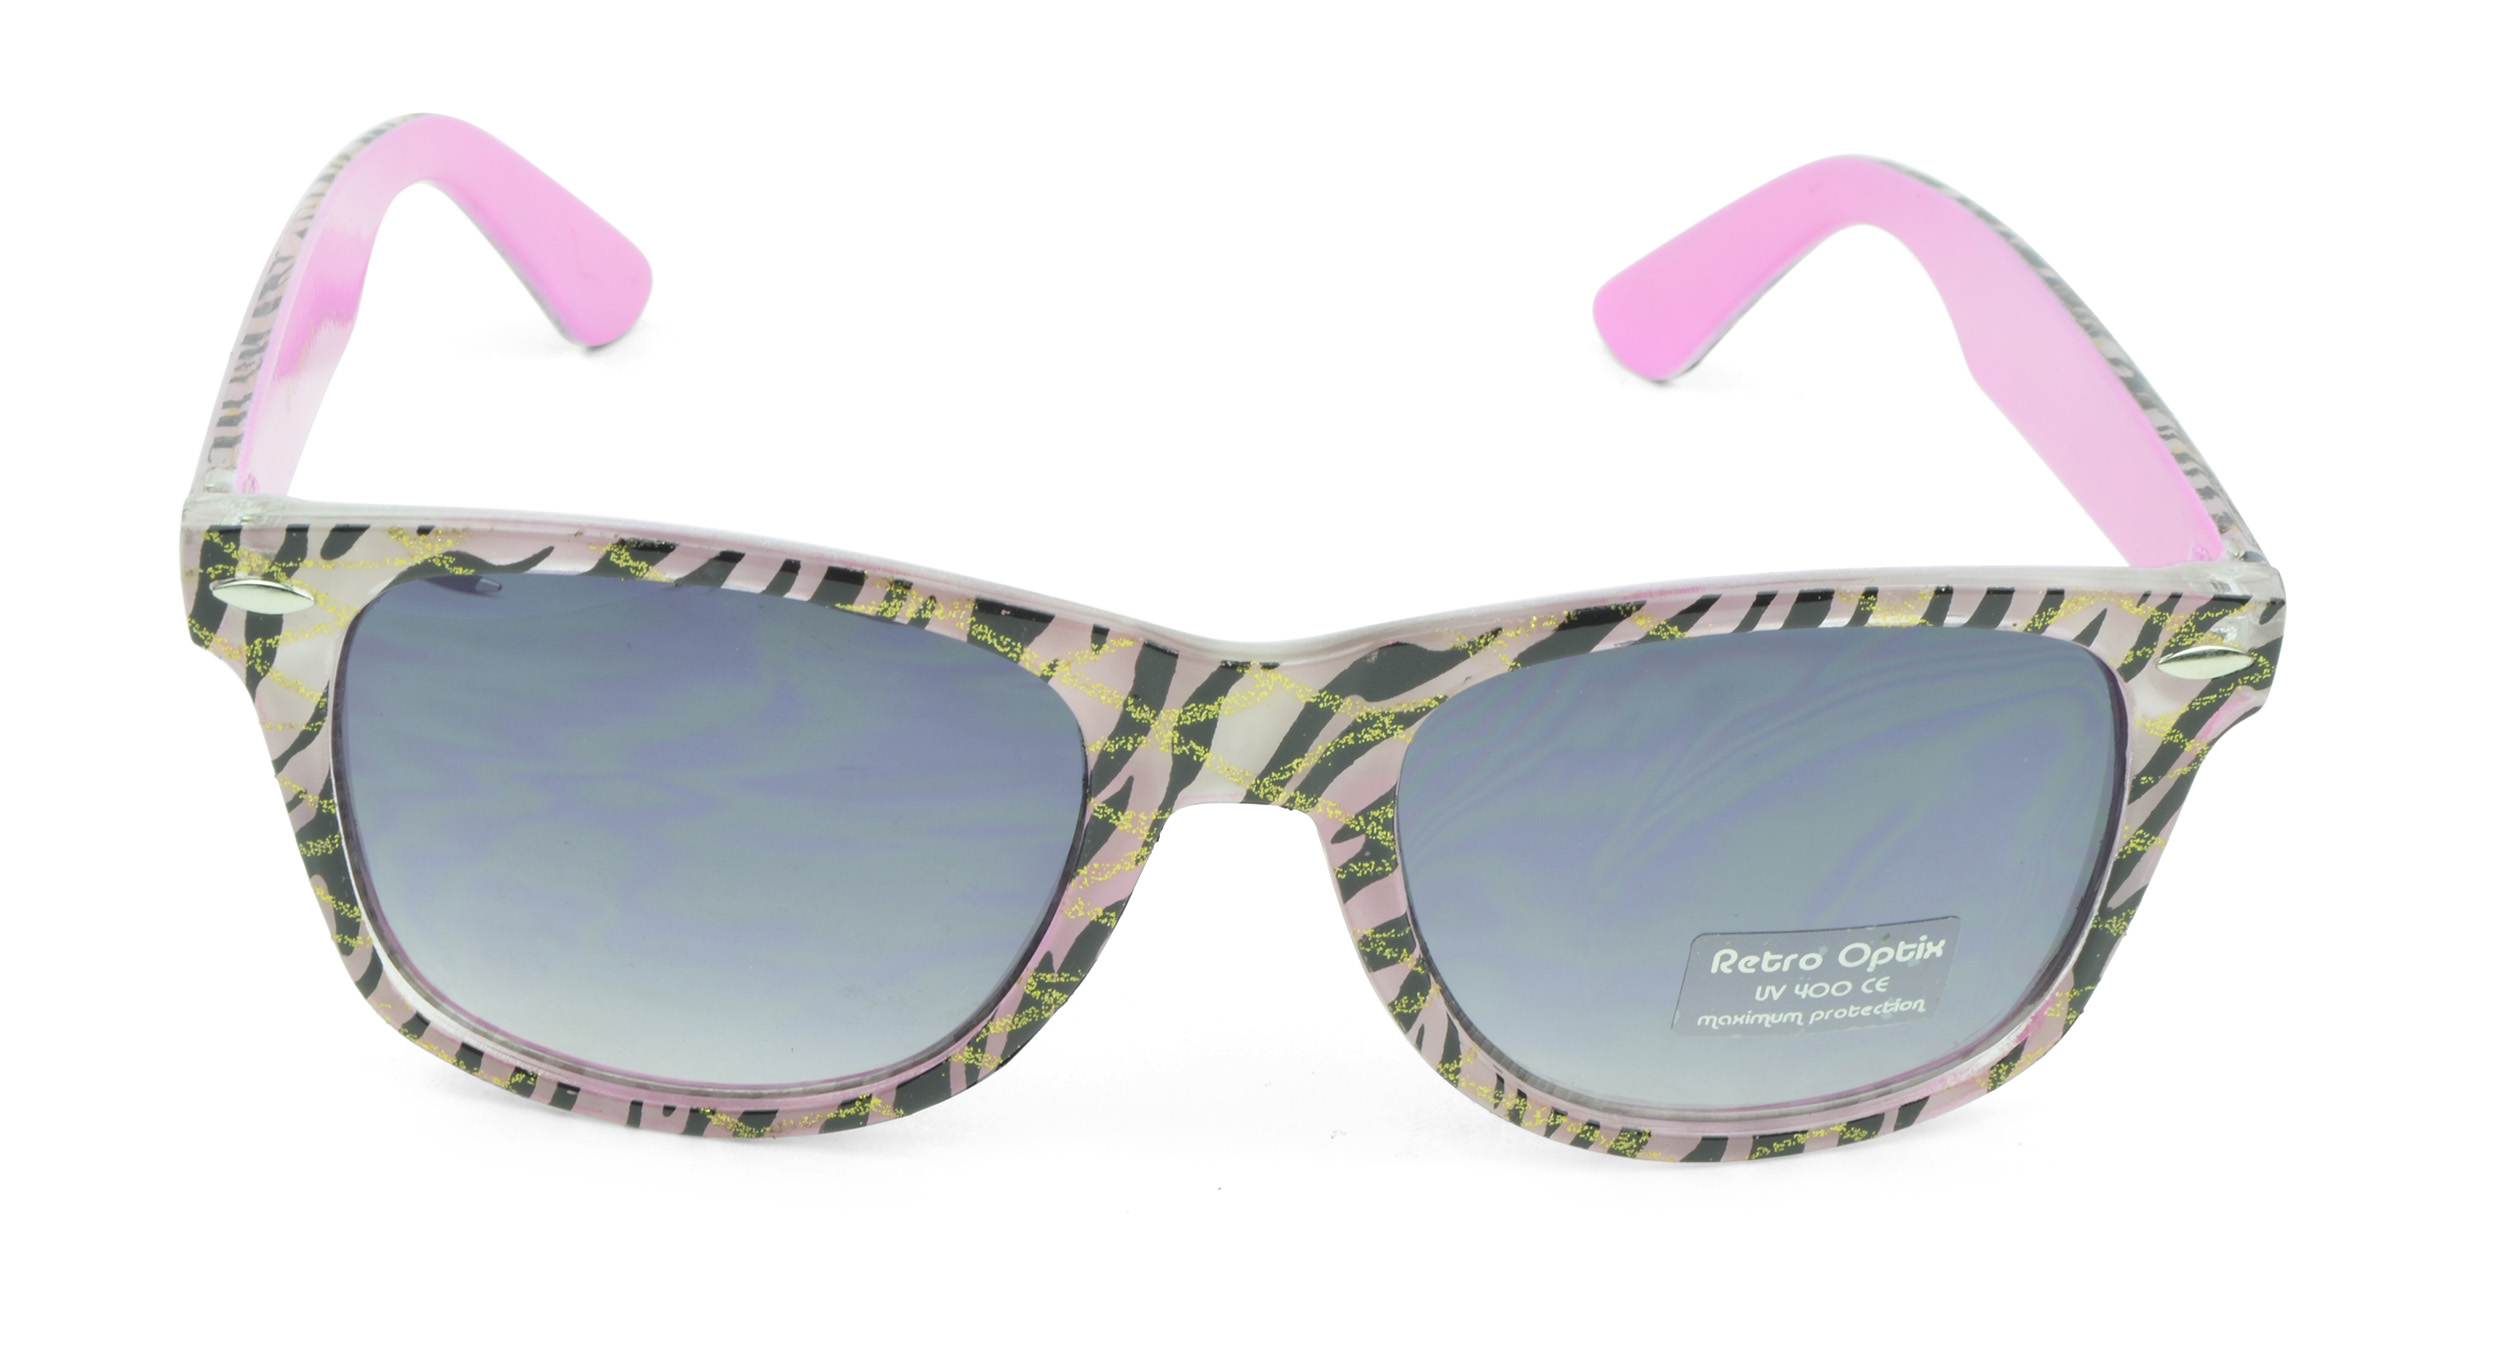 Belle Donne - Wayfarer Style Sunglasses Trendy Cheap Sunglasses High Quality Animal Print - Pink 